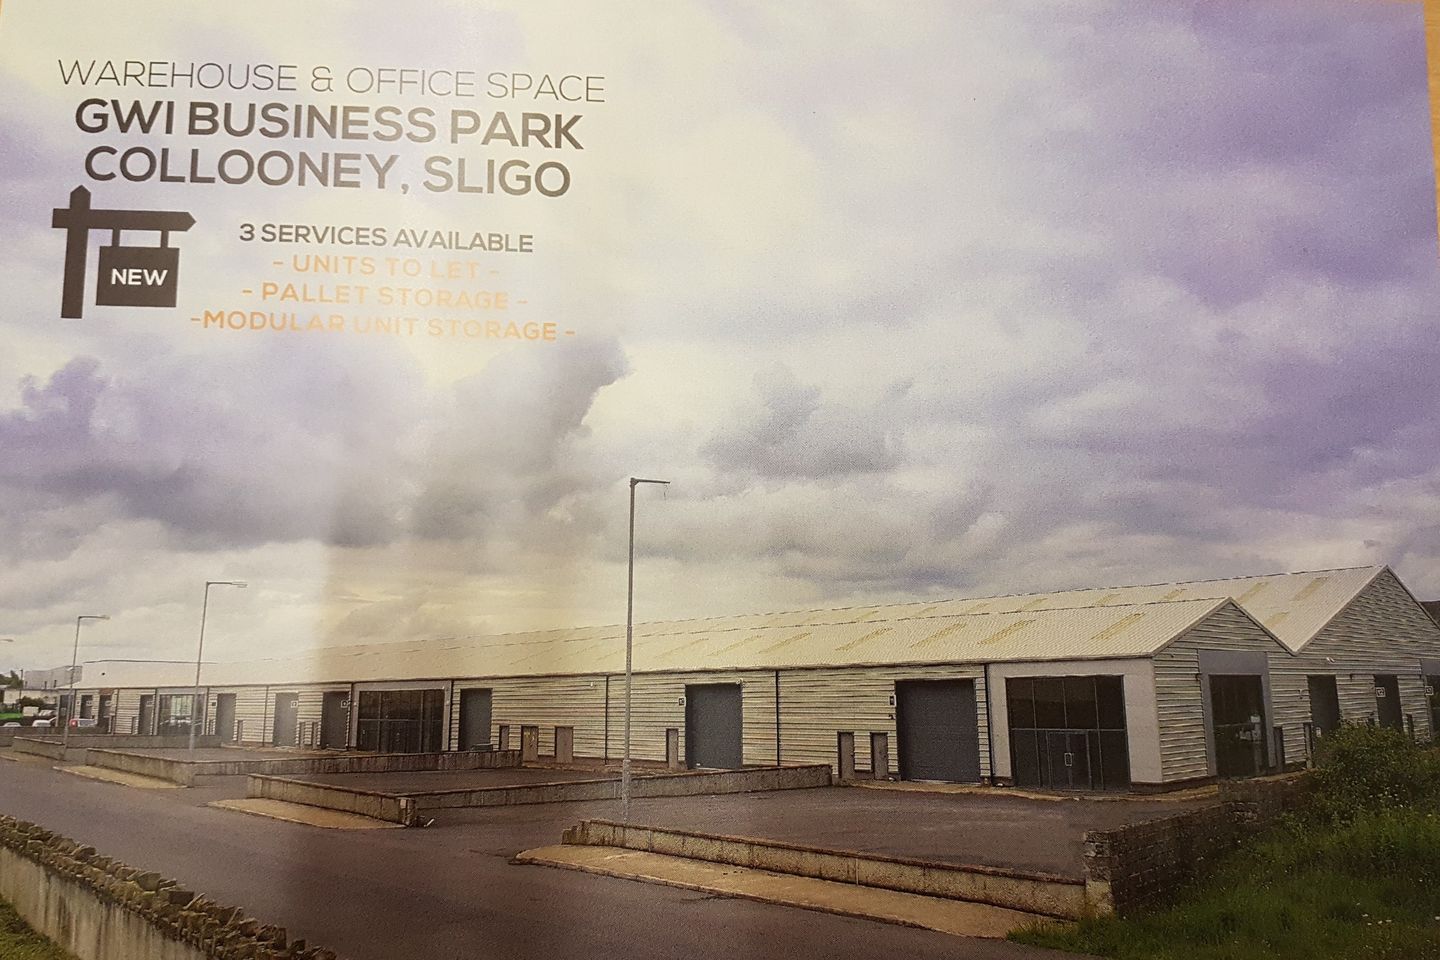 Unit 2 GWI Business Park, Collooney, Co. Sligo